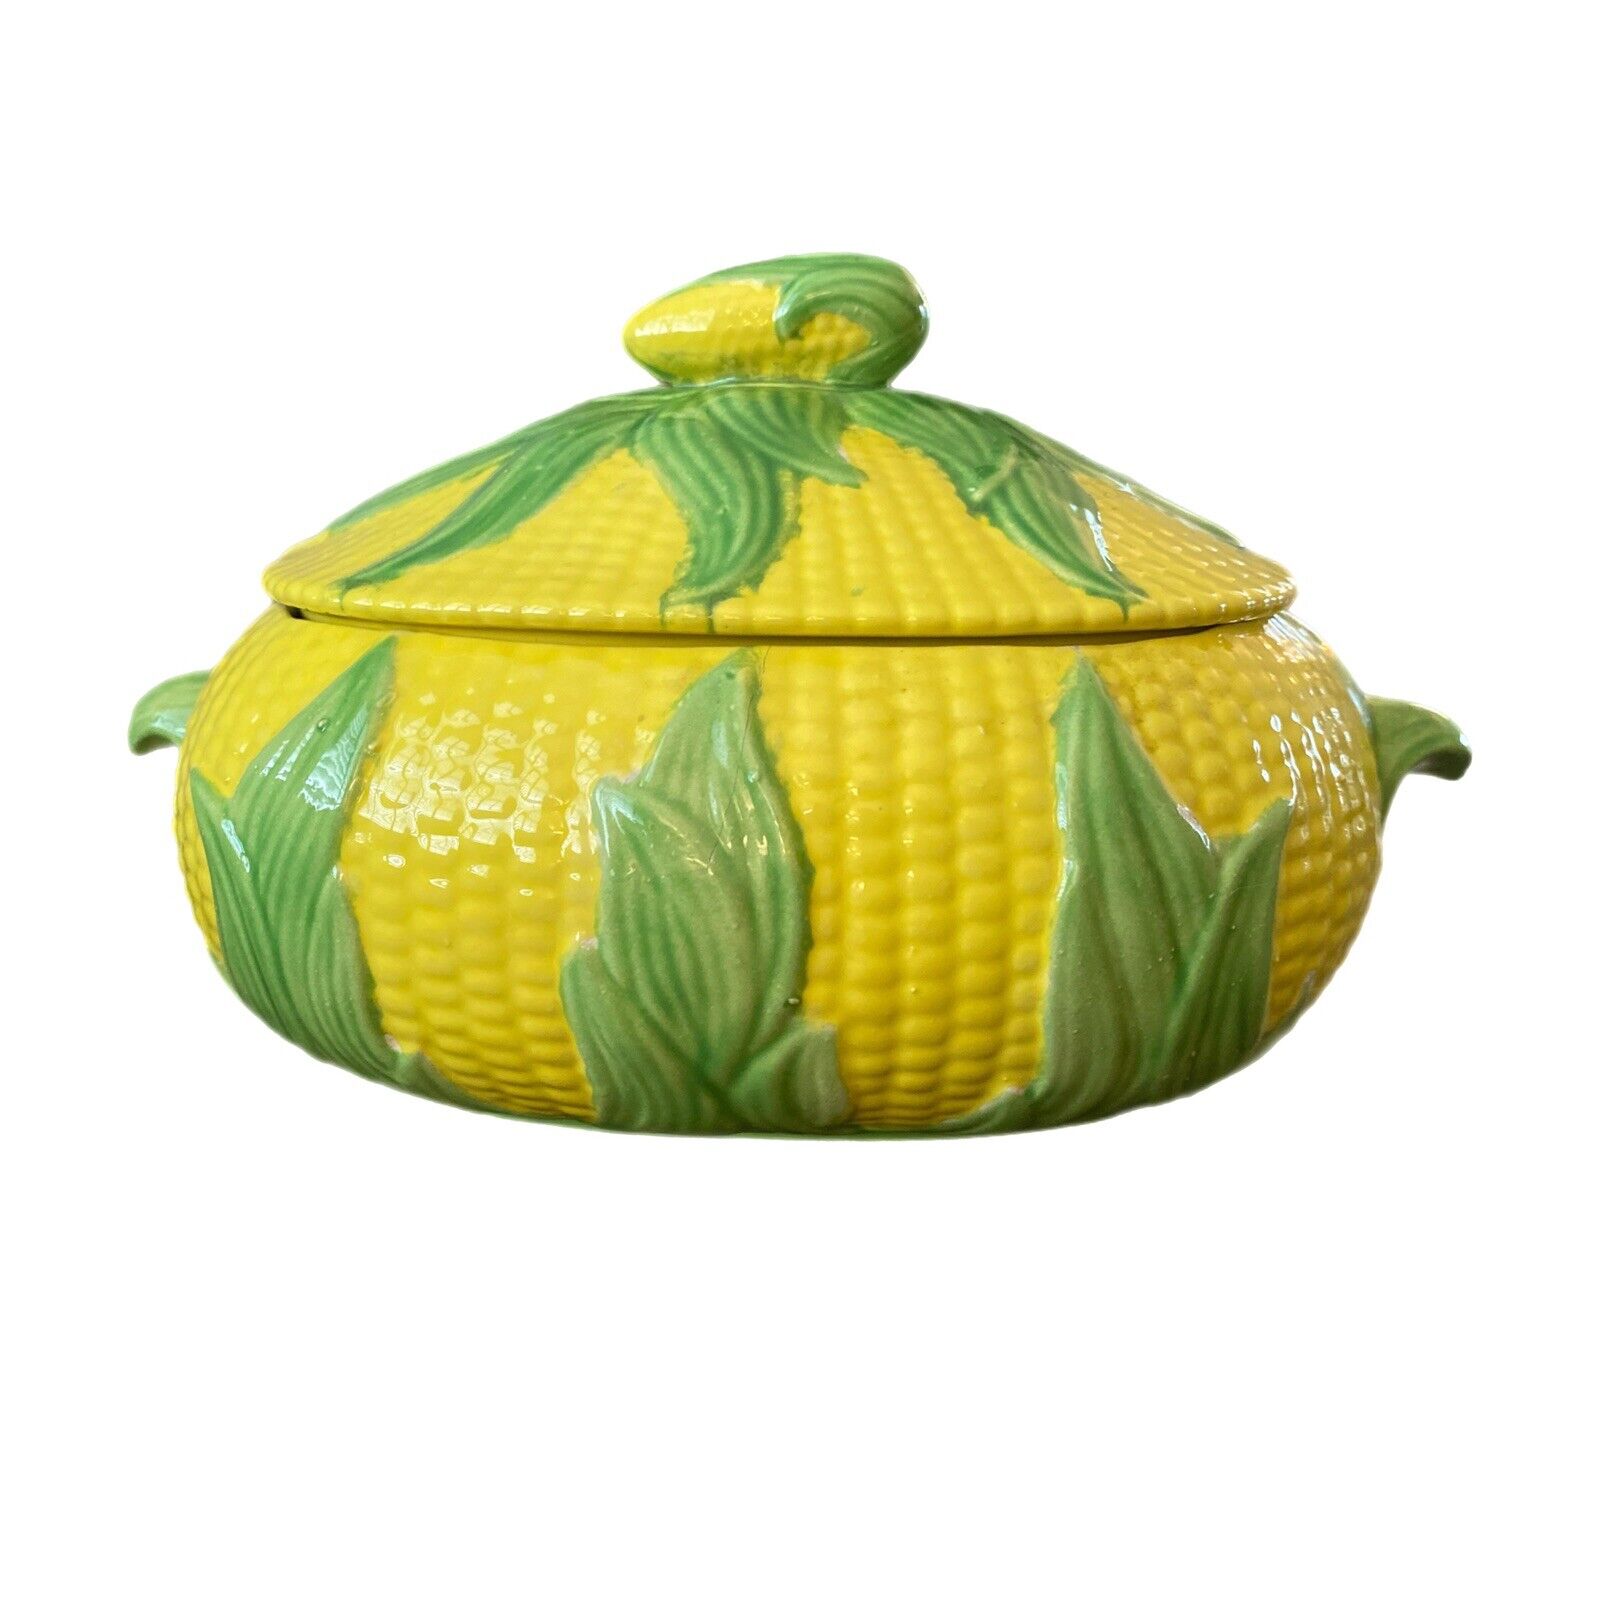 Vintage Ceramic Corn Husks Casserole Dish Sunshine Yellow Farmhouse Decor 11x6”